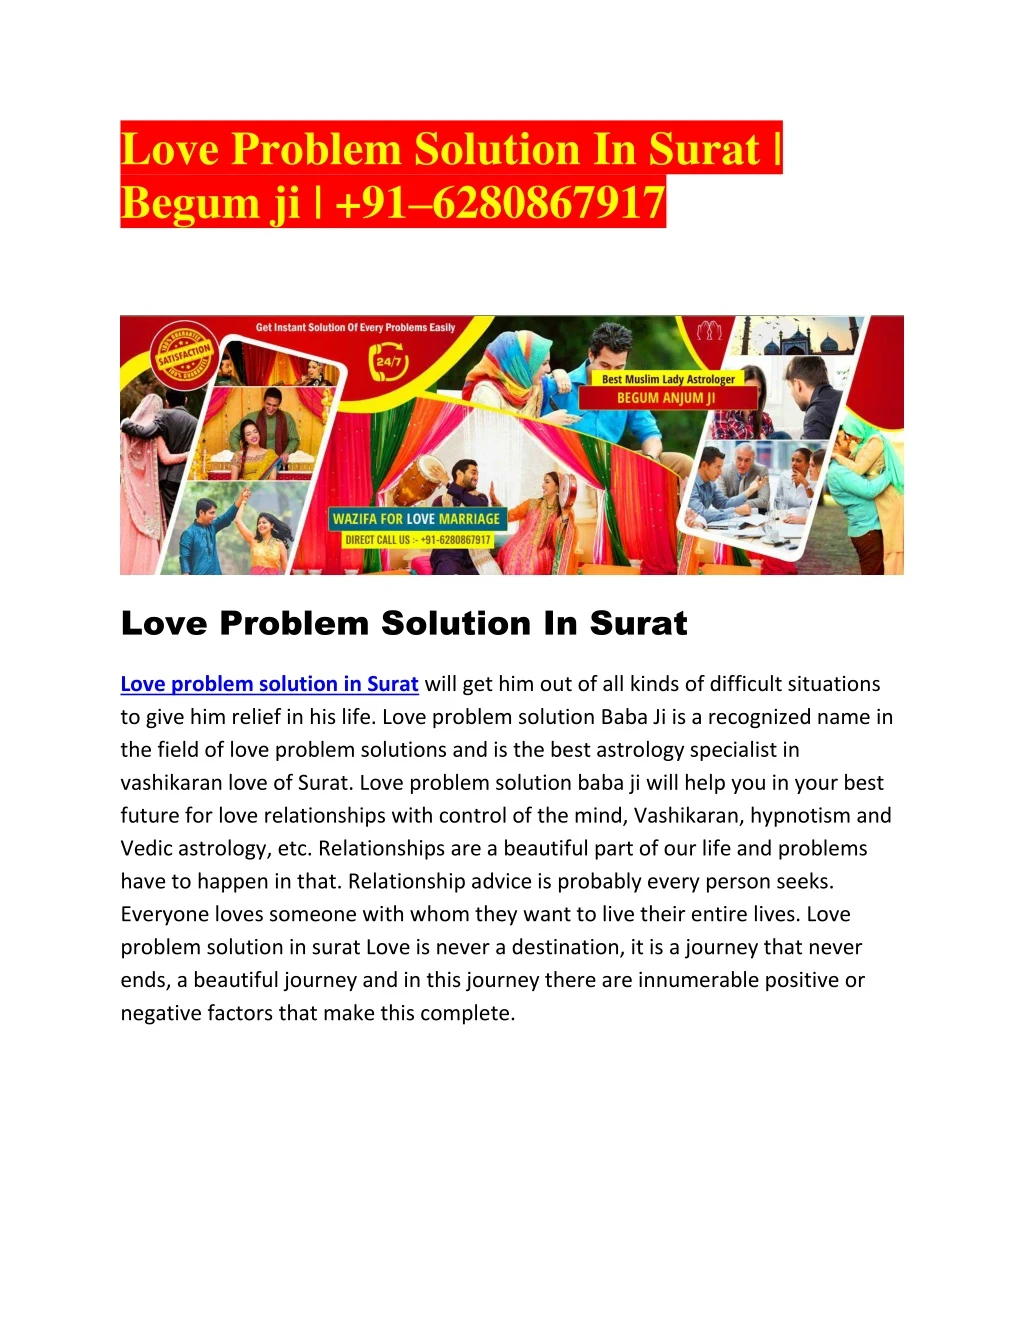 love problem solution in surat begum